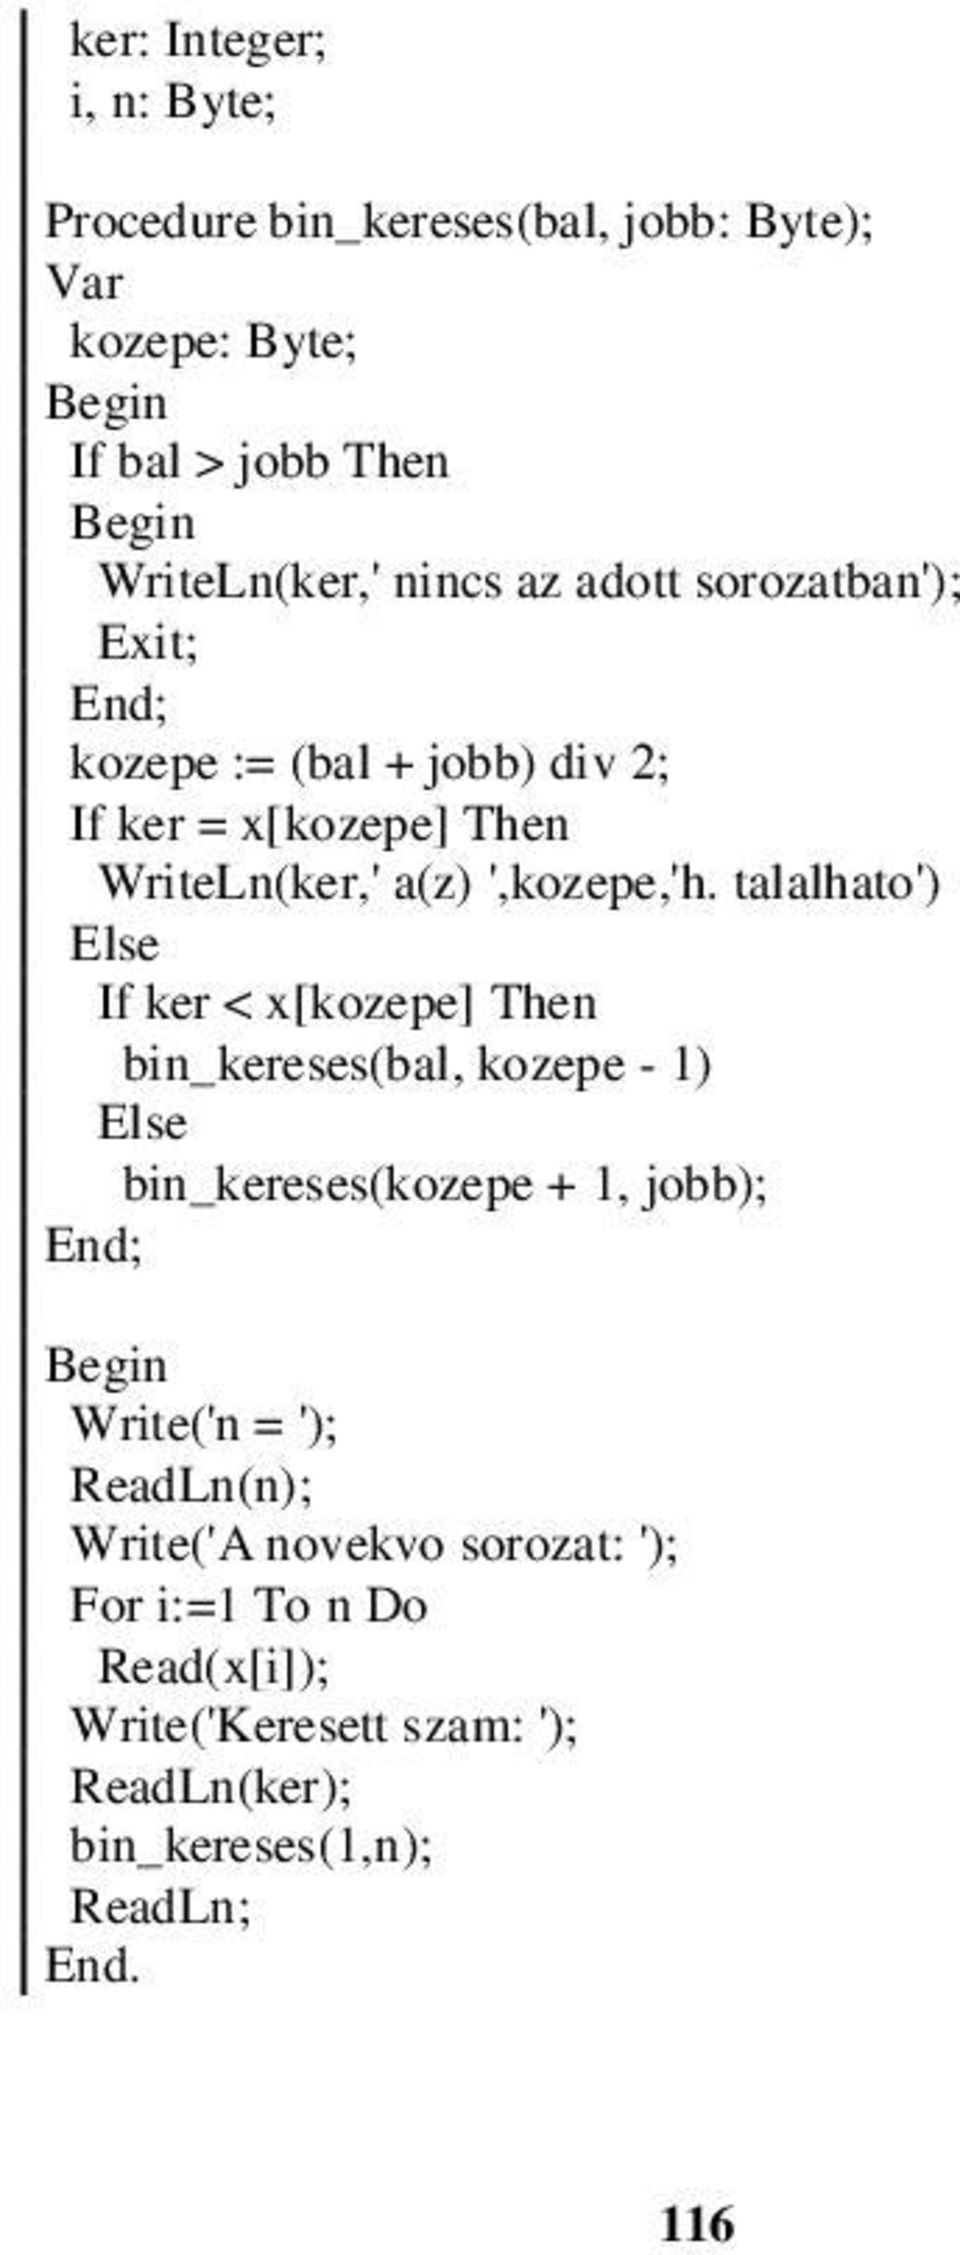 talalhato') If ker < x[kozepe] Then bin_kereses(bal, kozepe - 1) bin_kereses(kozepe + 1, jobb); End; Write('n = ');